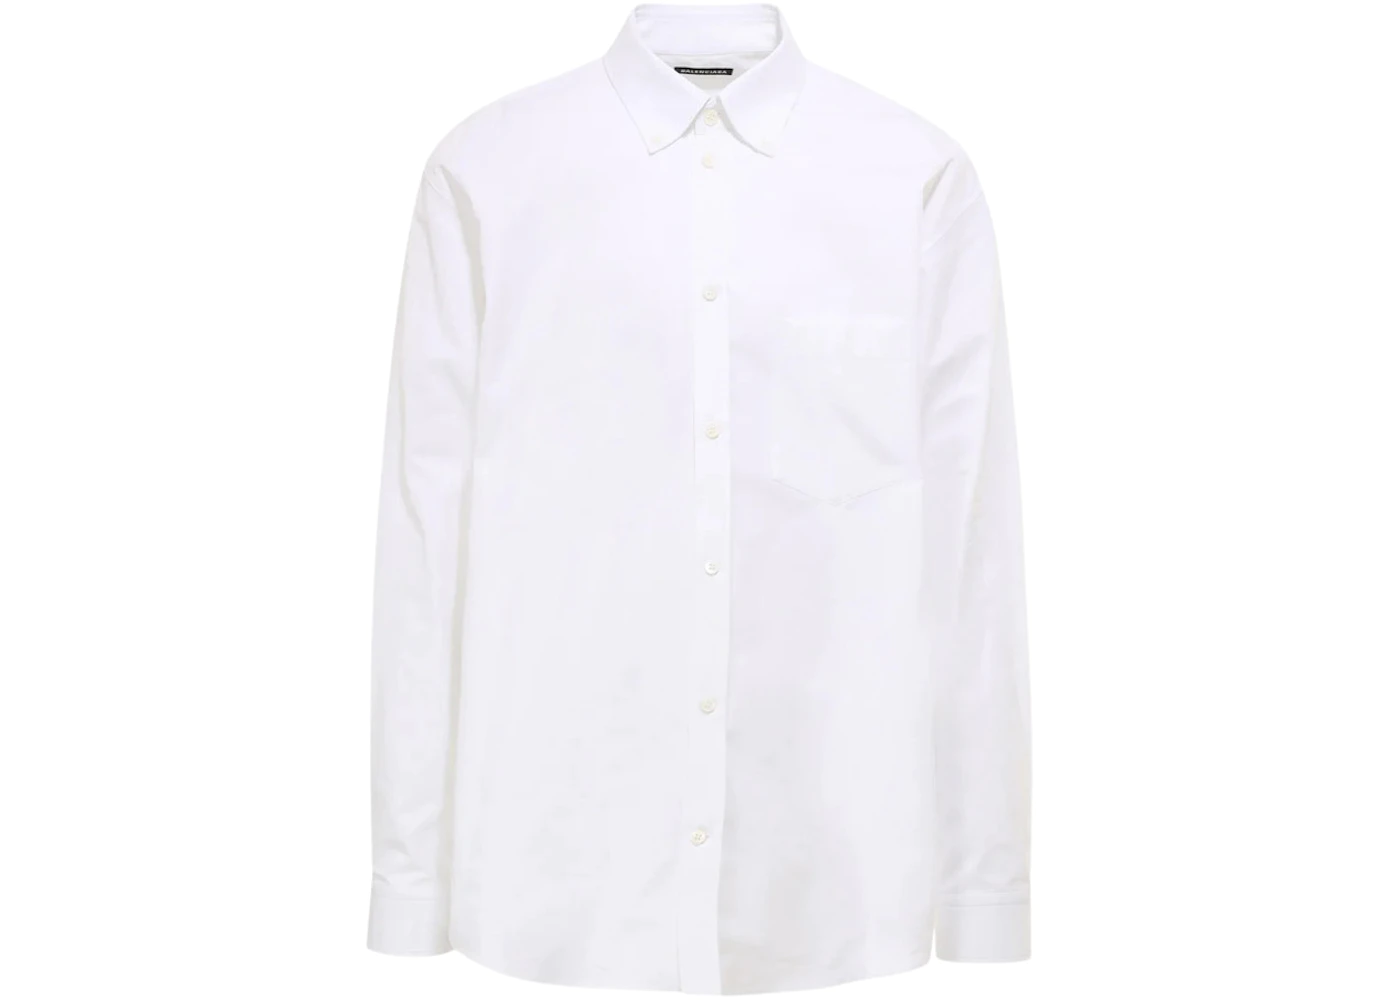 Balenciaga Sponsor Logo Shirt White Men's - US